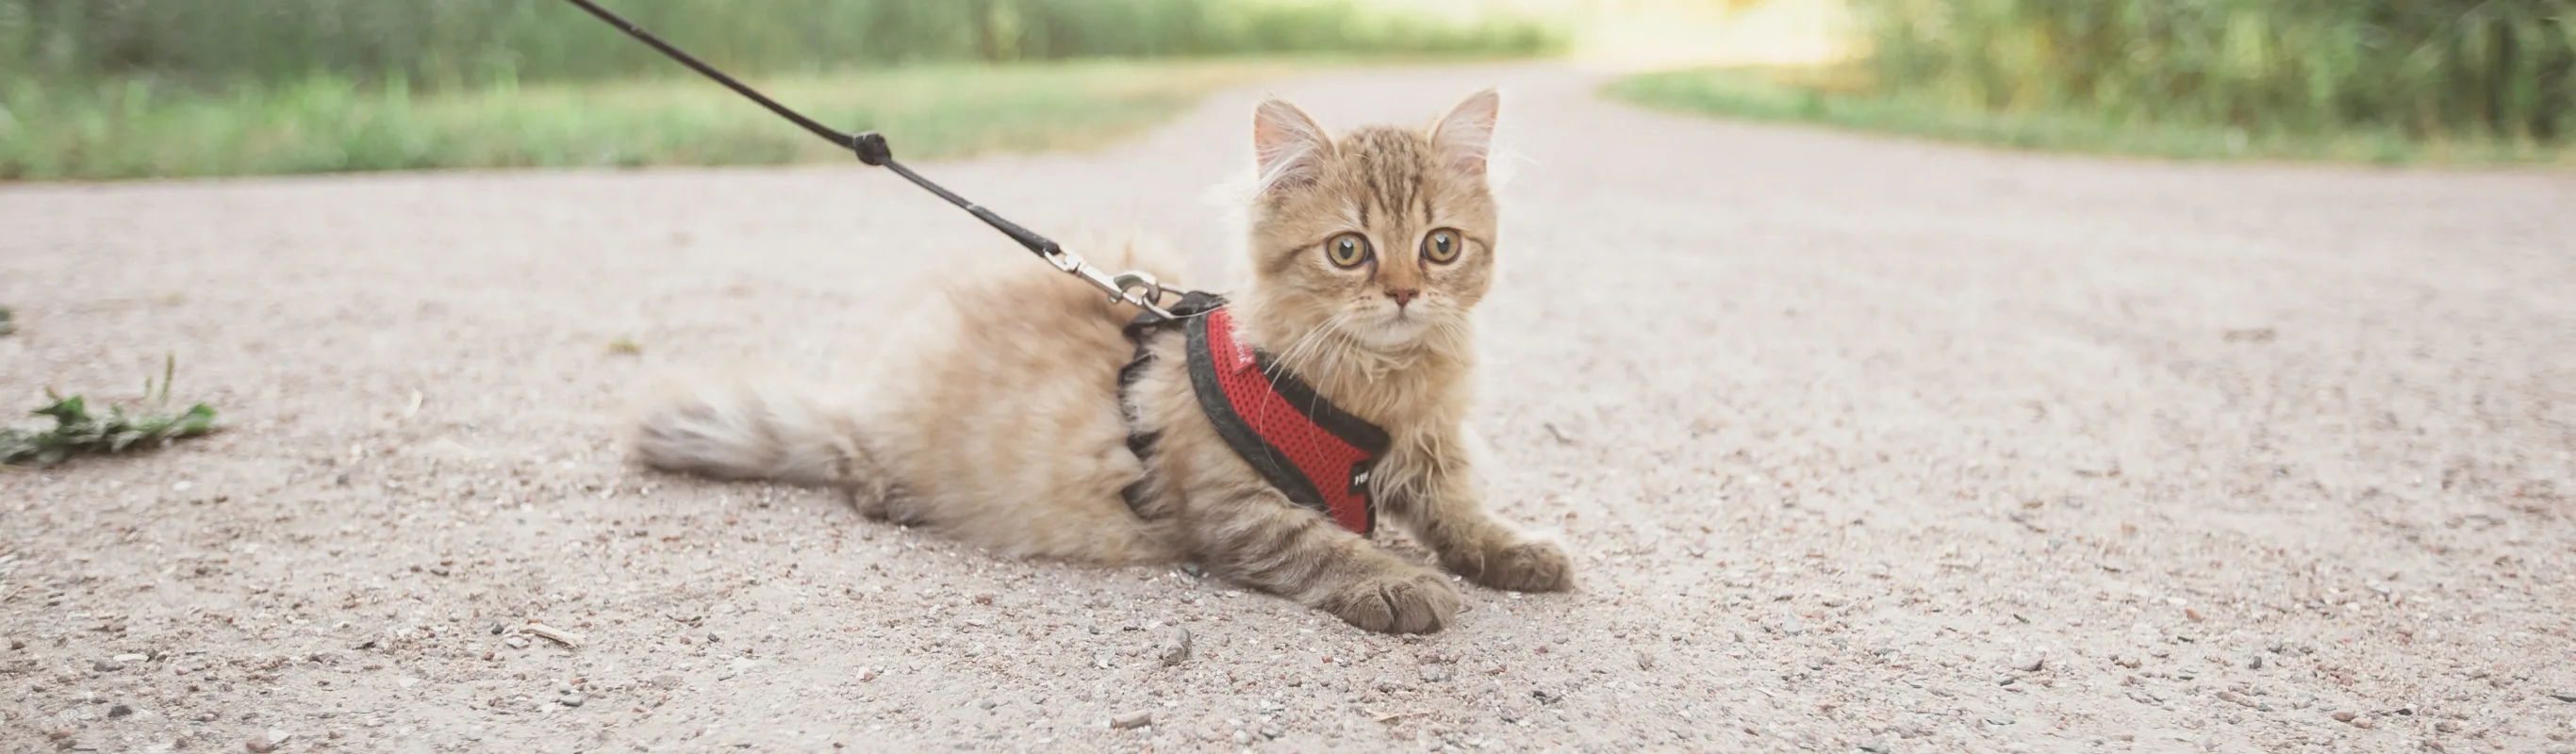 Cat on harness walking on dirt road